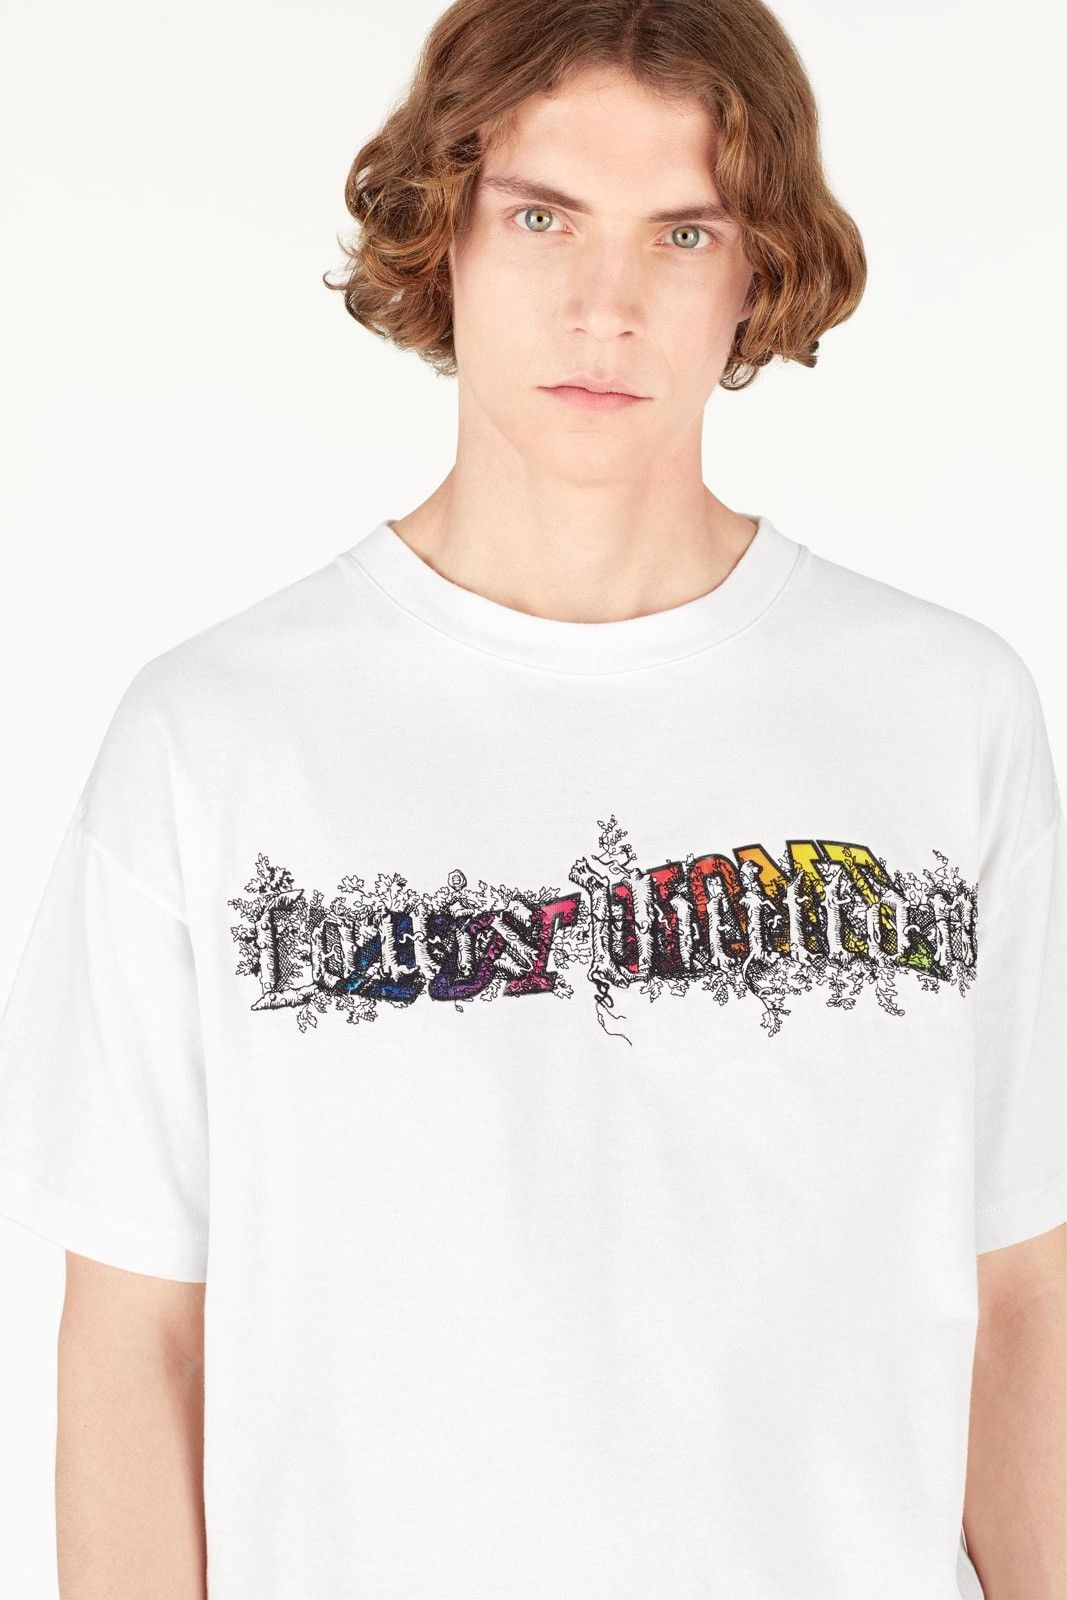 Louis Vuitton Louis Vuitton Virgil Abloh T-shirt, Grailed